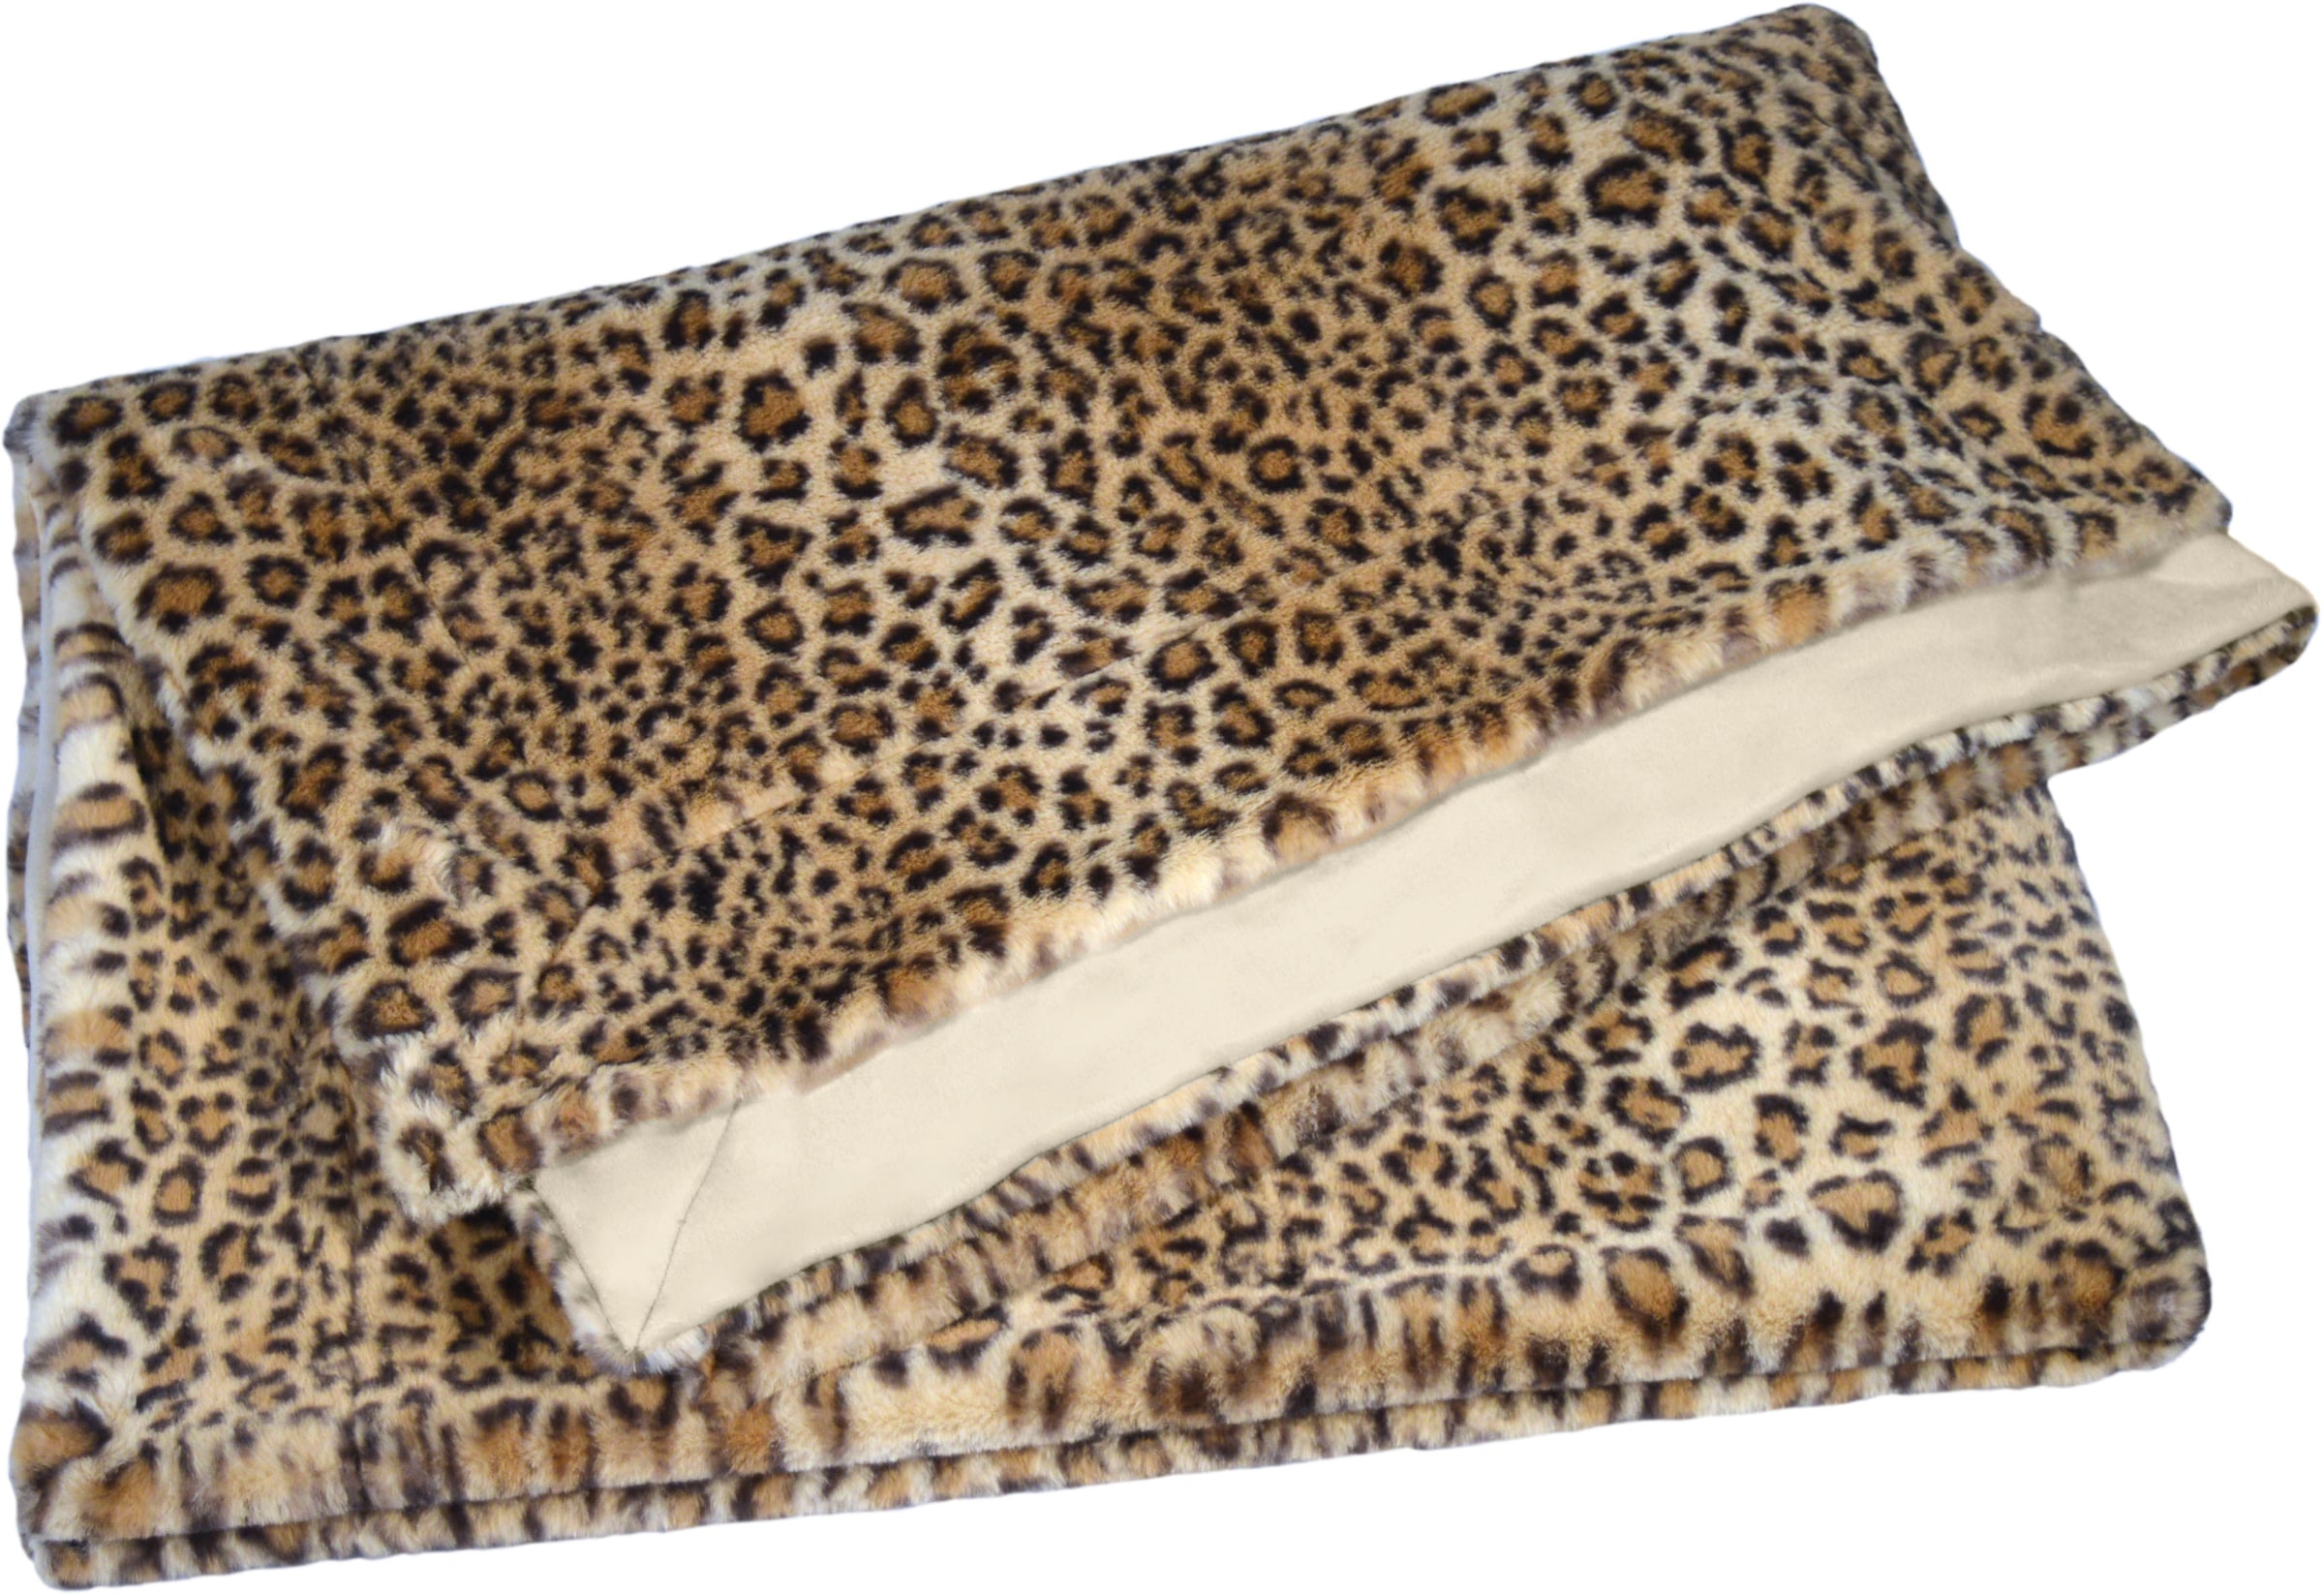 MESANA Wohndecke »Leopard«, aus hochwertigem Fellimitat maintenant